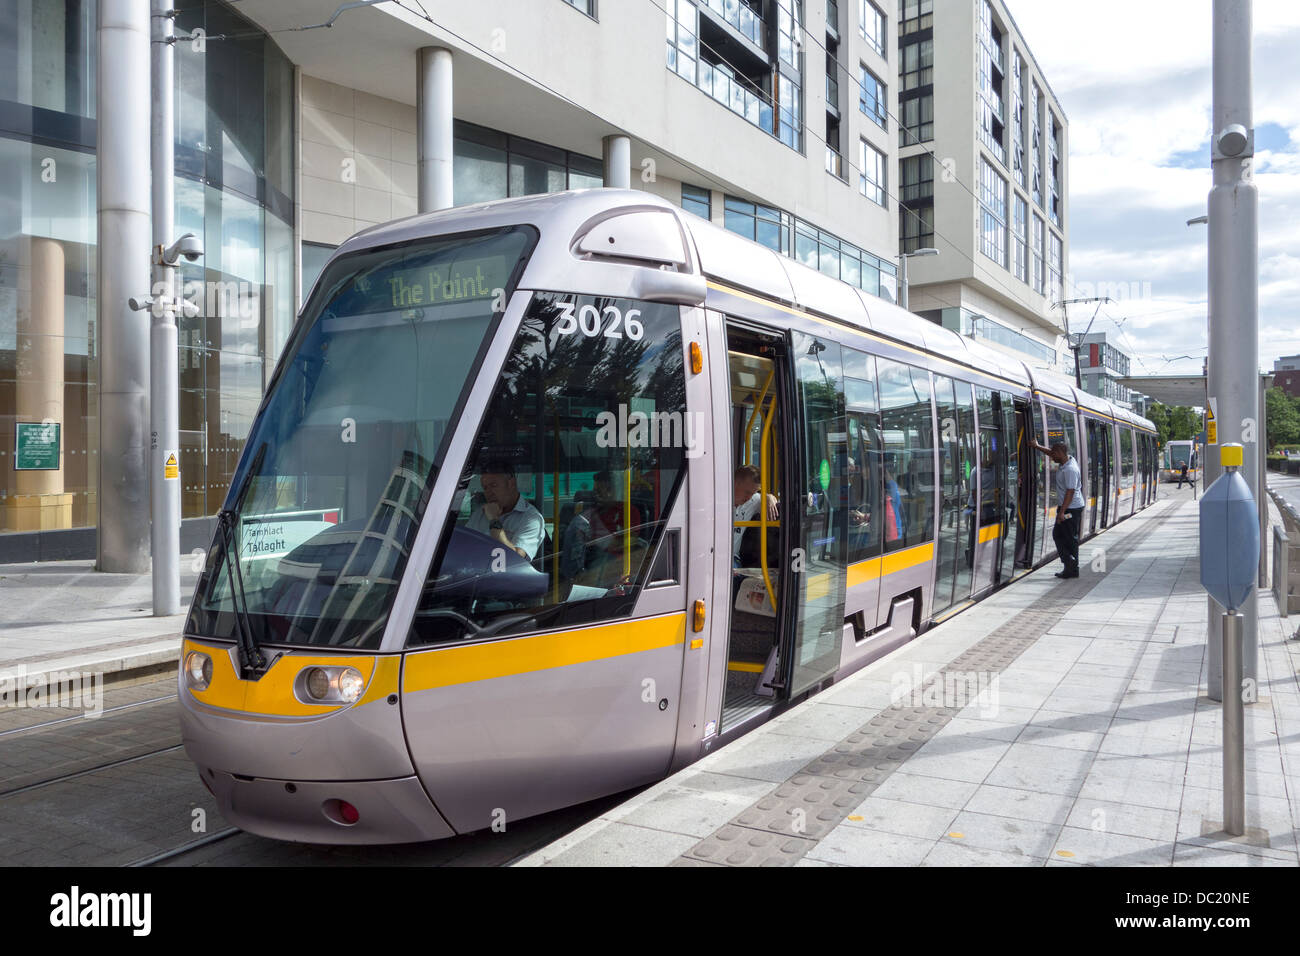 Luas- Dublin light rail tram system at the terminus at Tallaght, County Dublin, Ireland Stock Photo